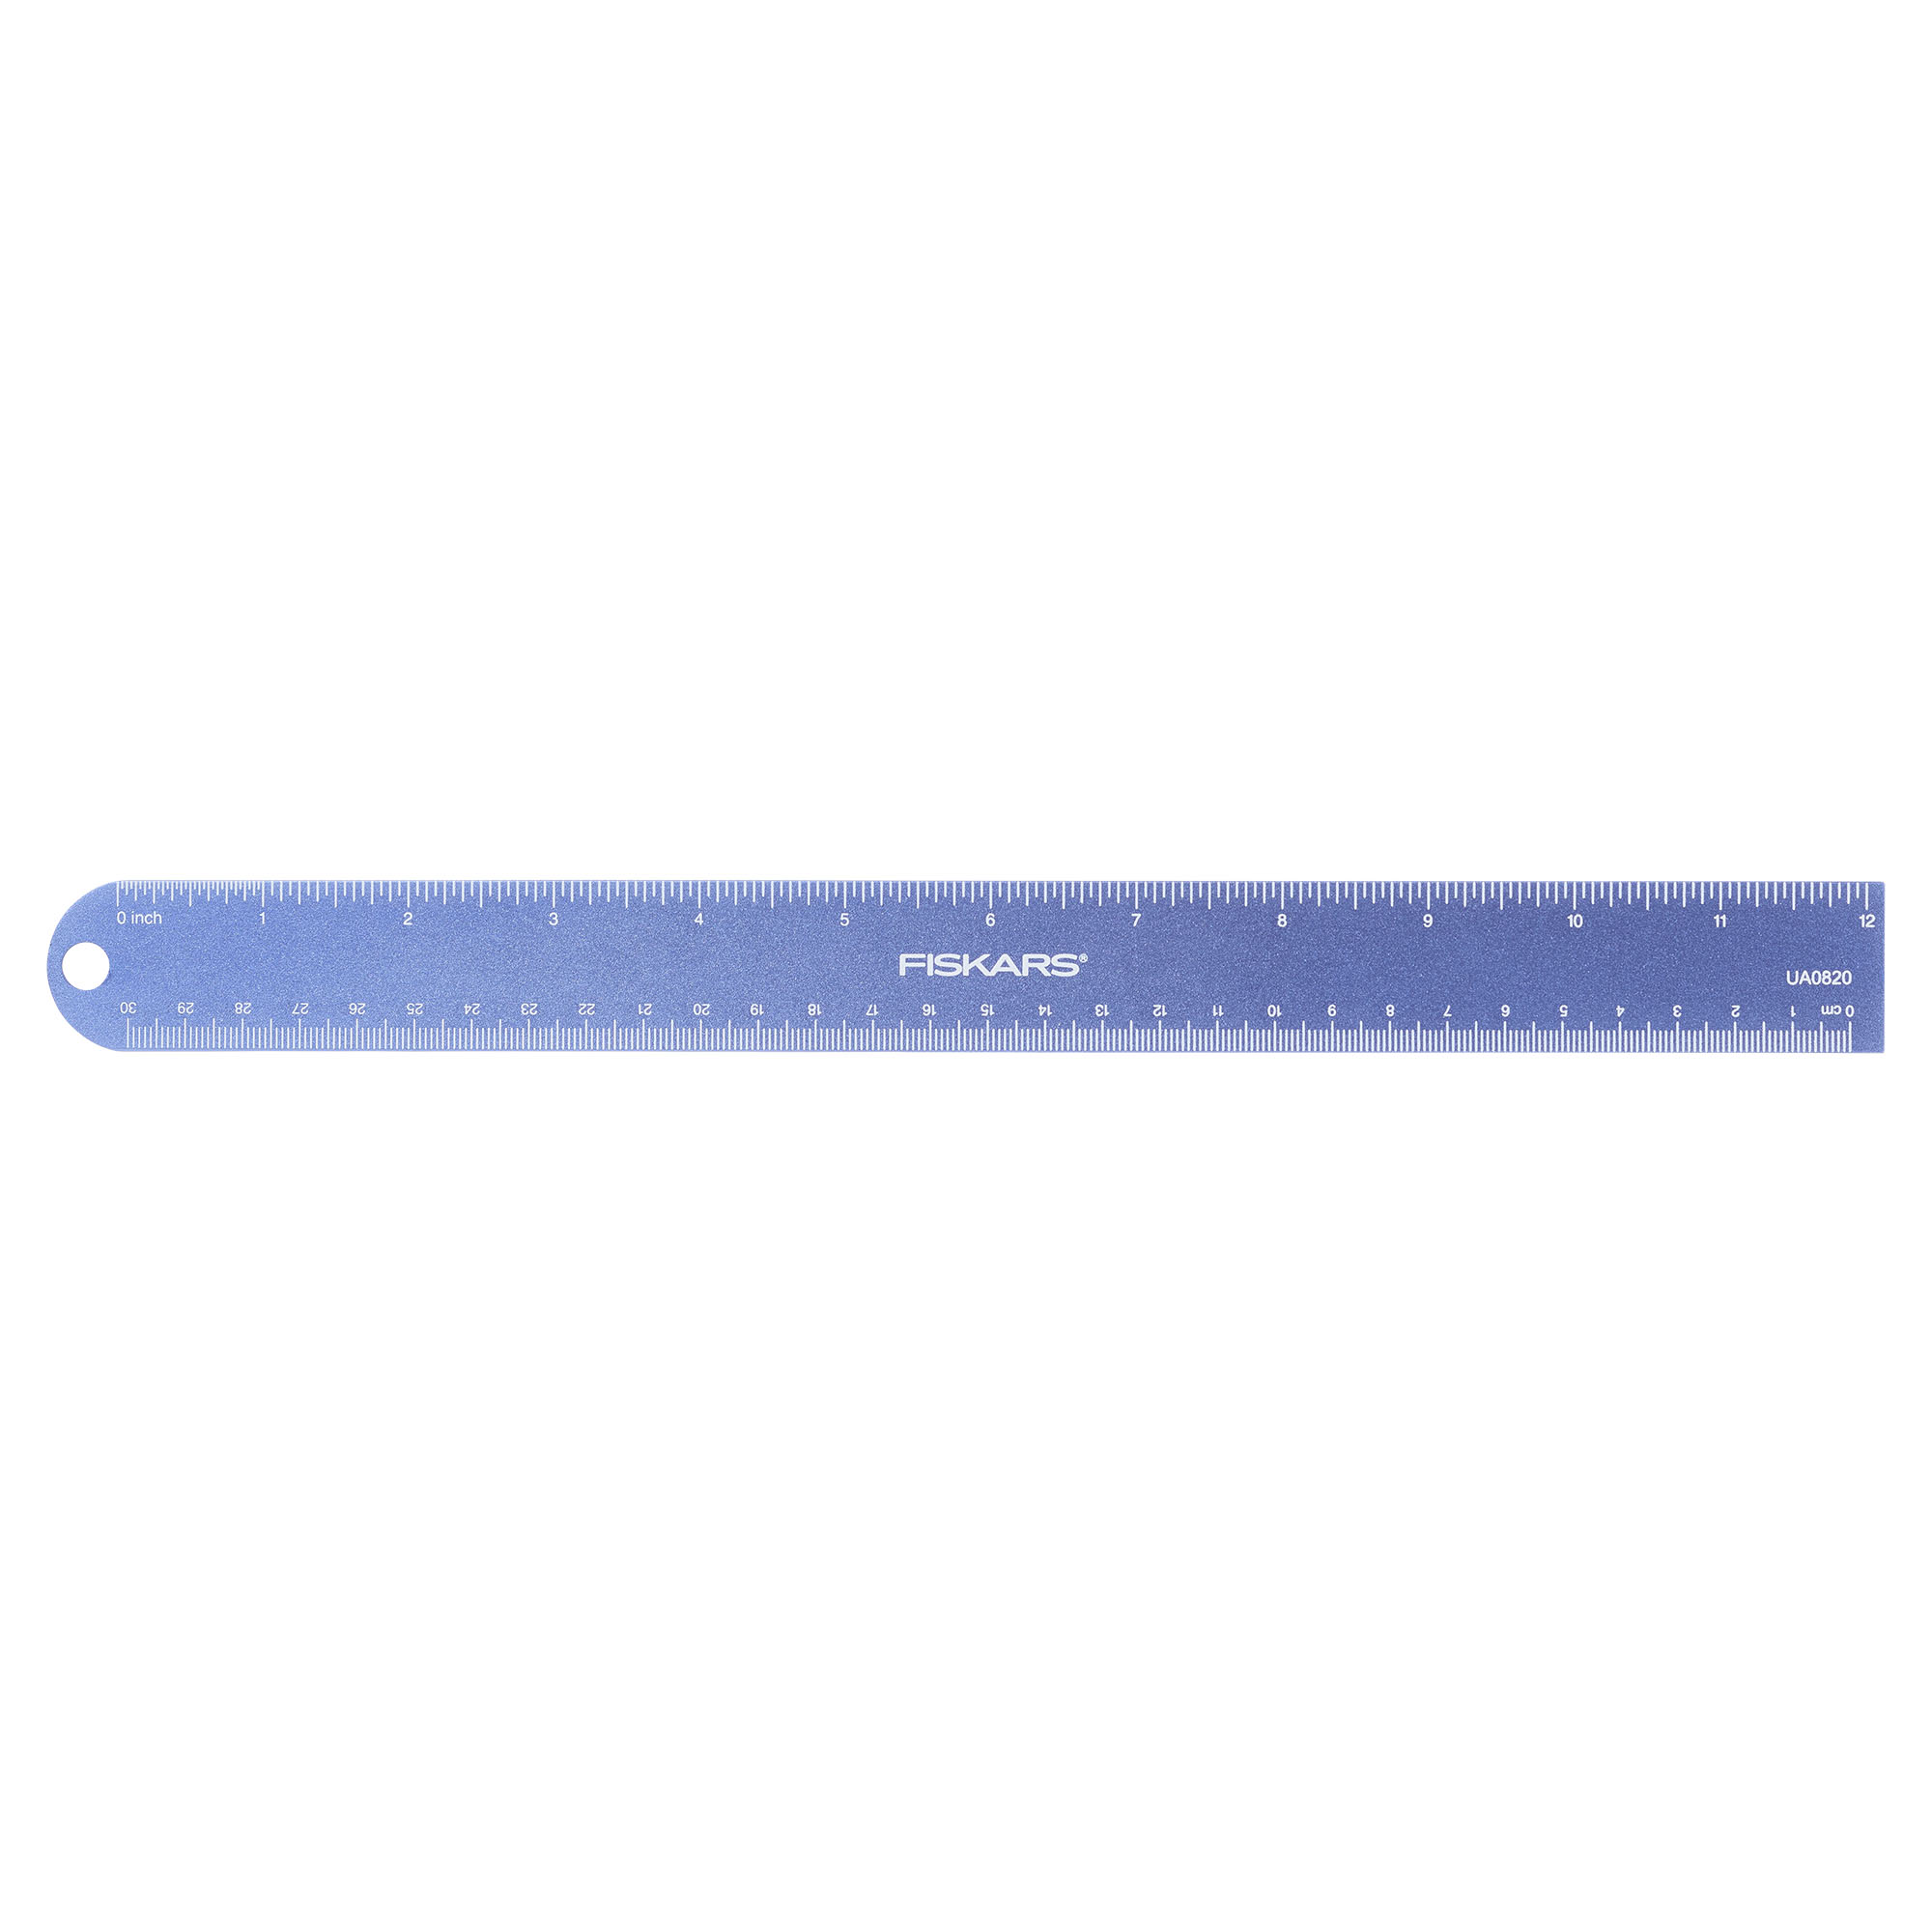 Fiskars Metal Ruler for Measuring, 12 Ruler, School Supplies, Metallic Blue